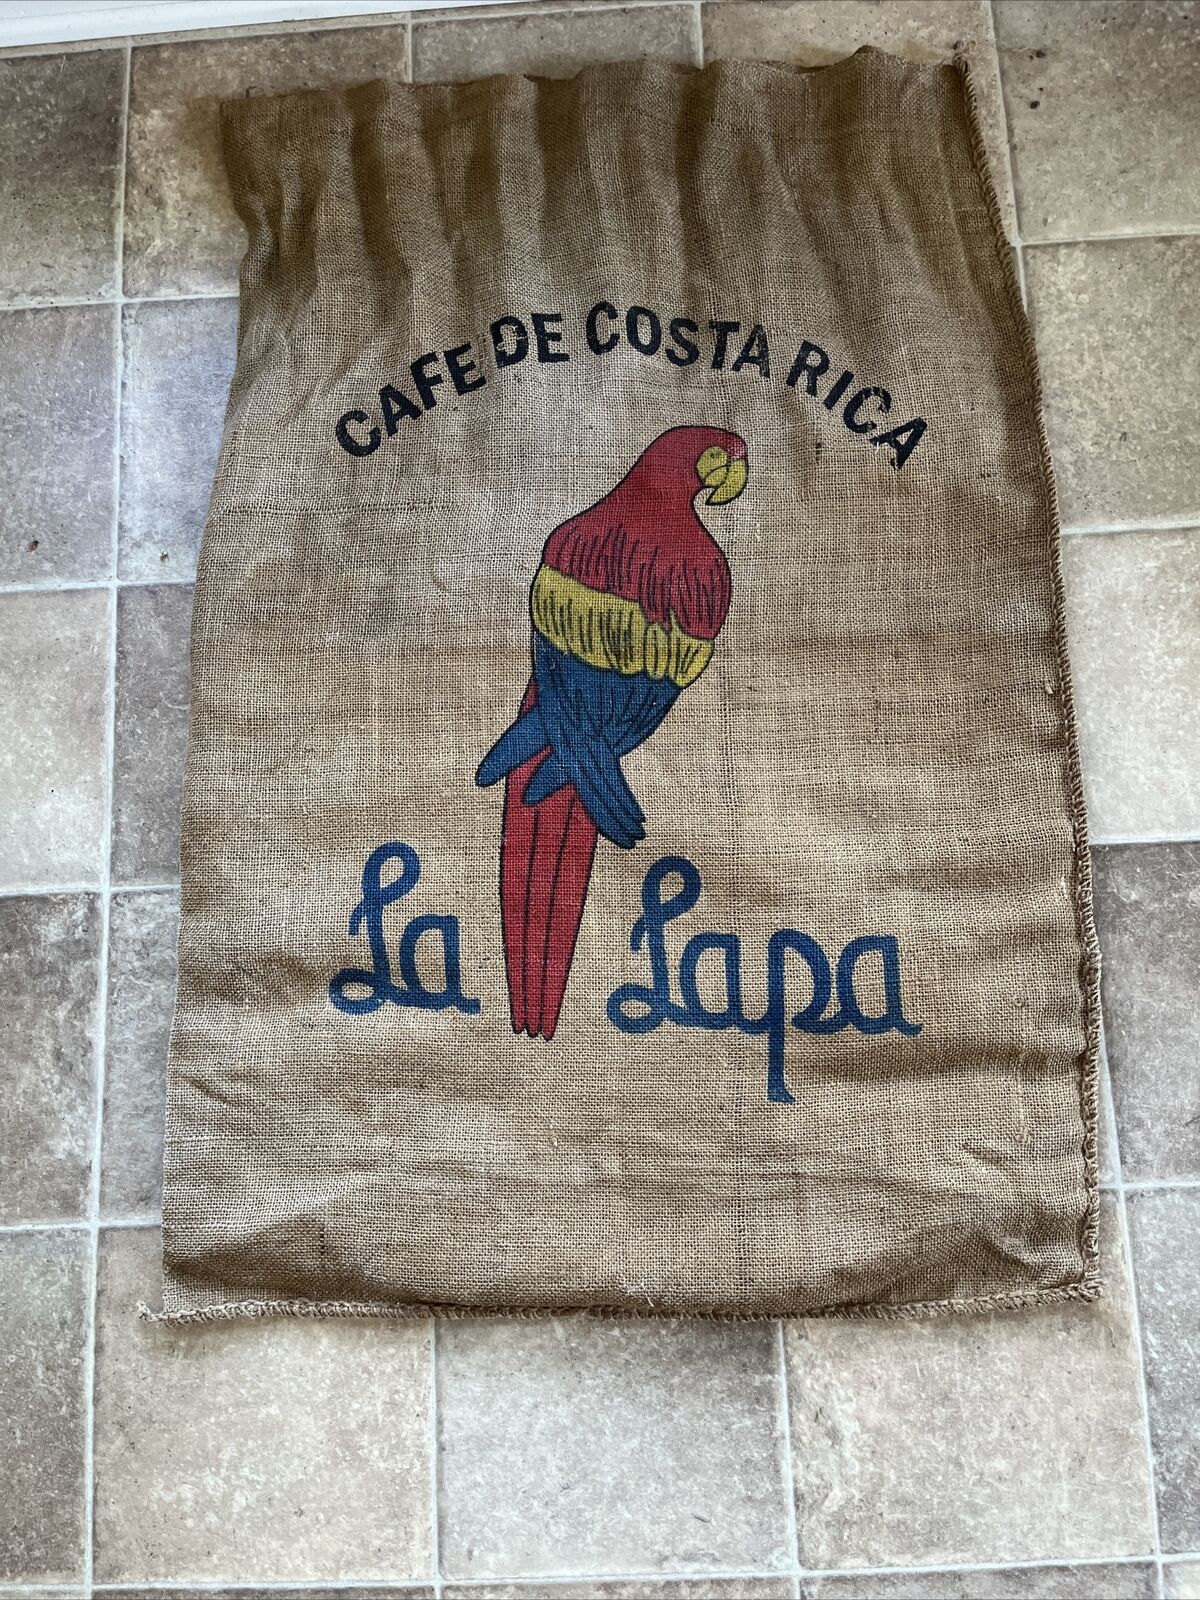 Large Costa Rica Coffee Bean Burlap Bag Sack Wall Art Decor 39x27 inch Parrot